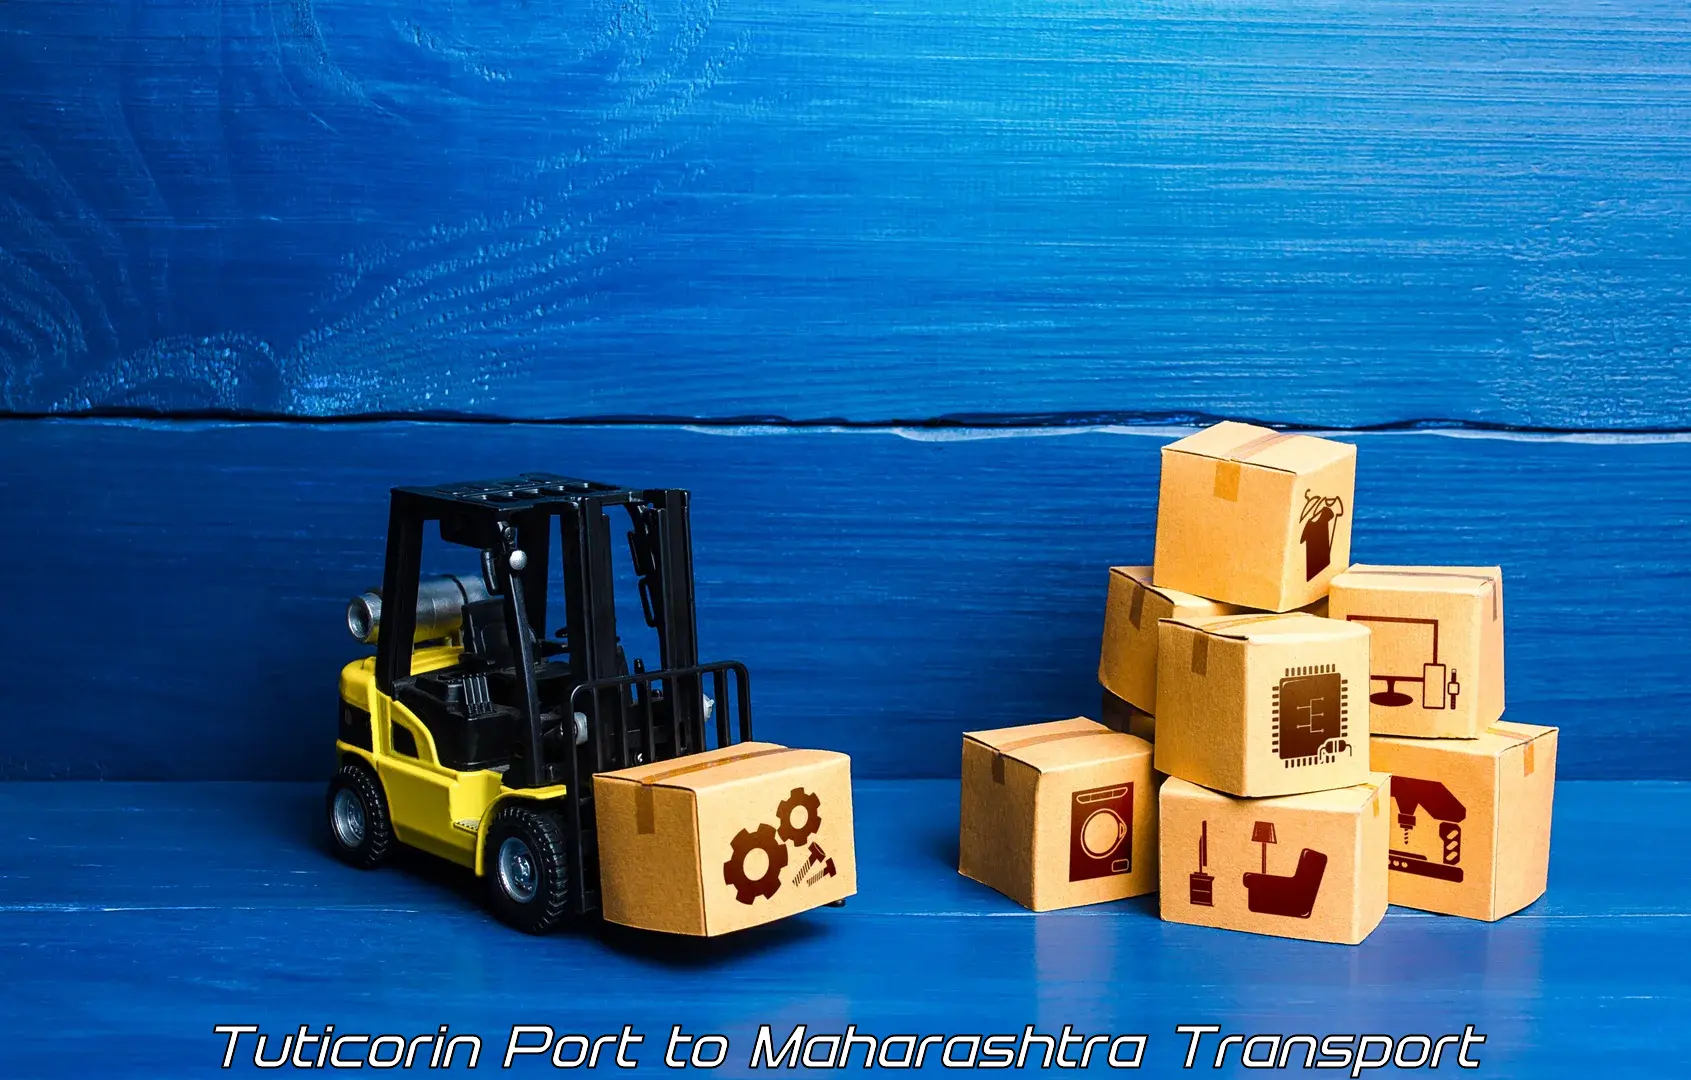 Two wheeler parcel service Tuticorin Port to Lonar